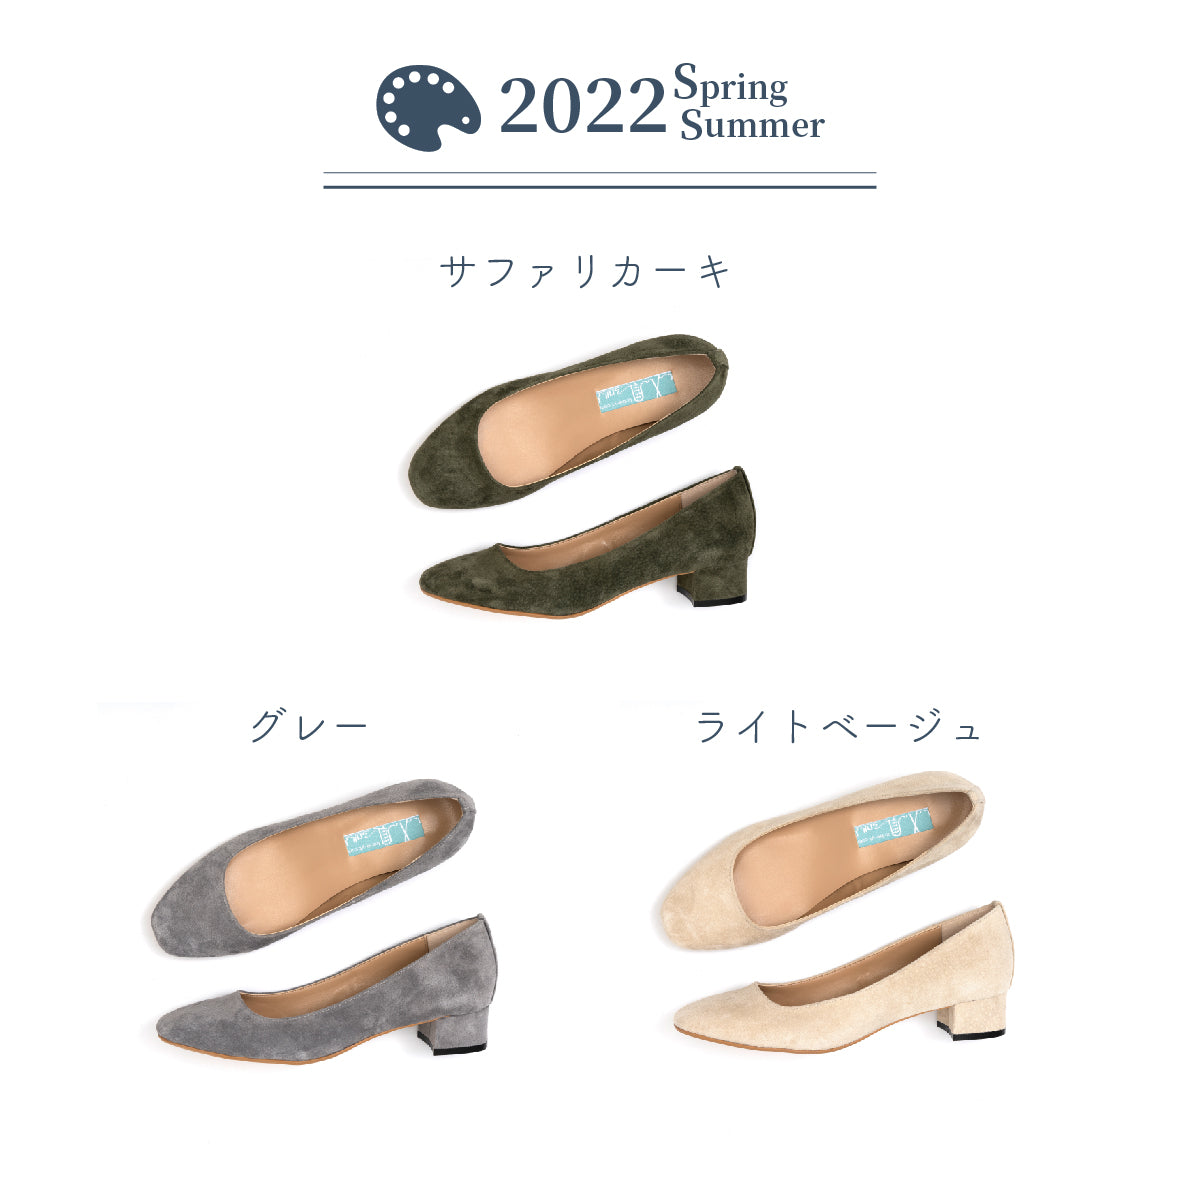 [D2031] 3cm Heel Square Toe Pumps 2022 Autumn/Winter 